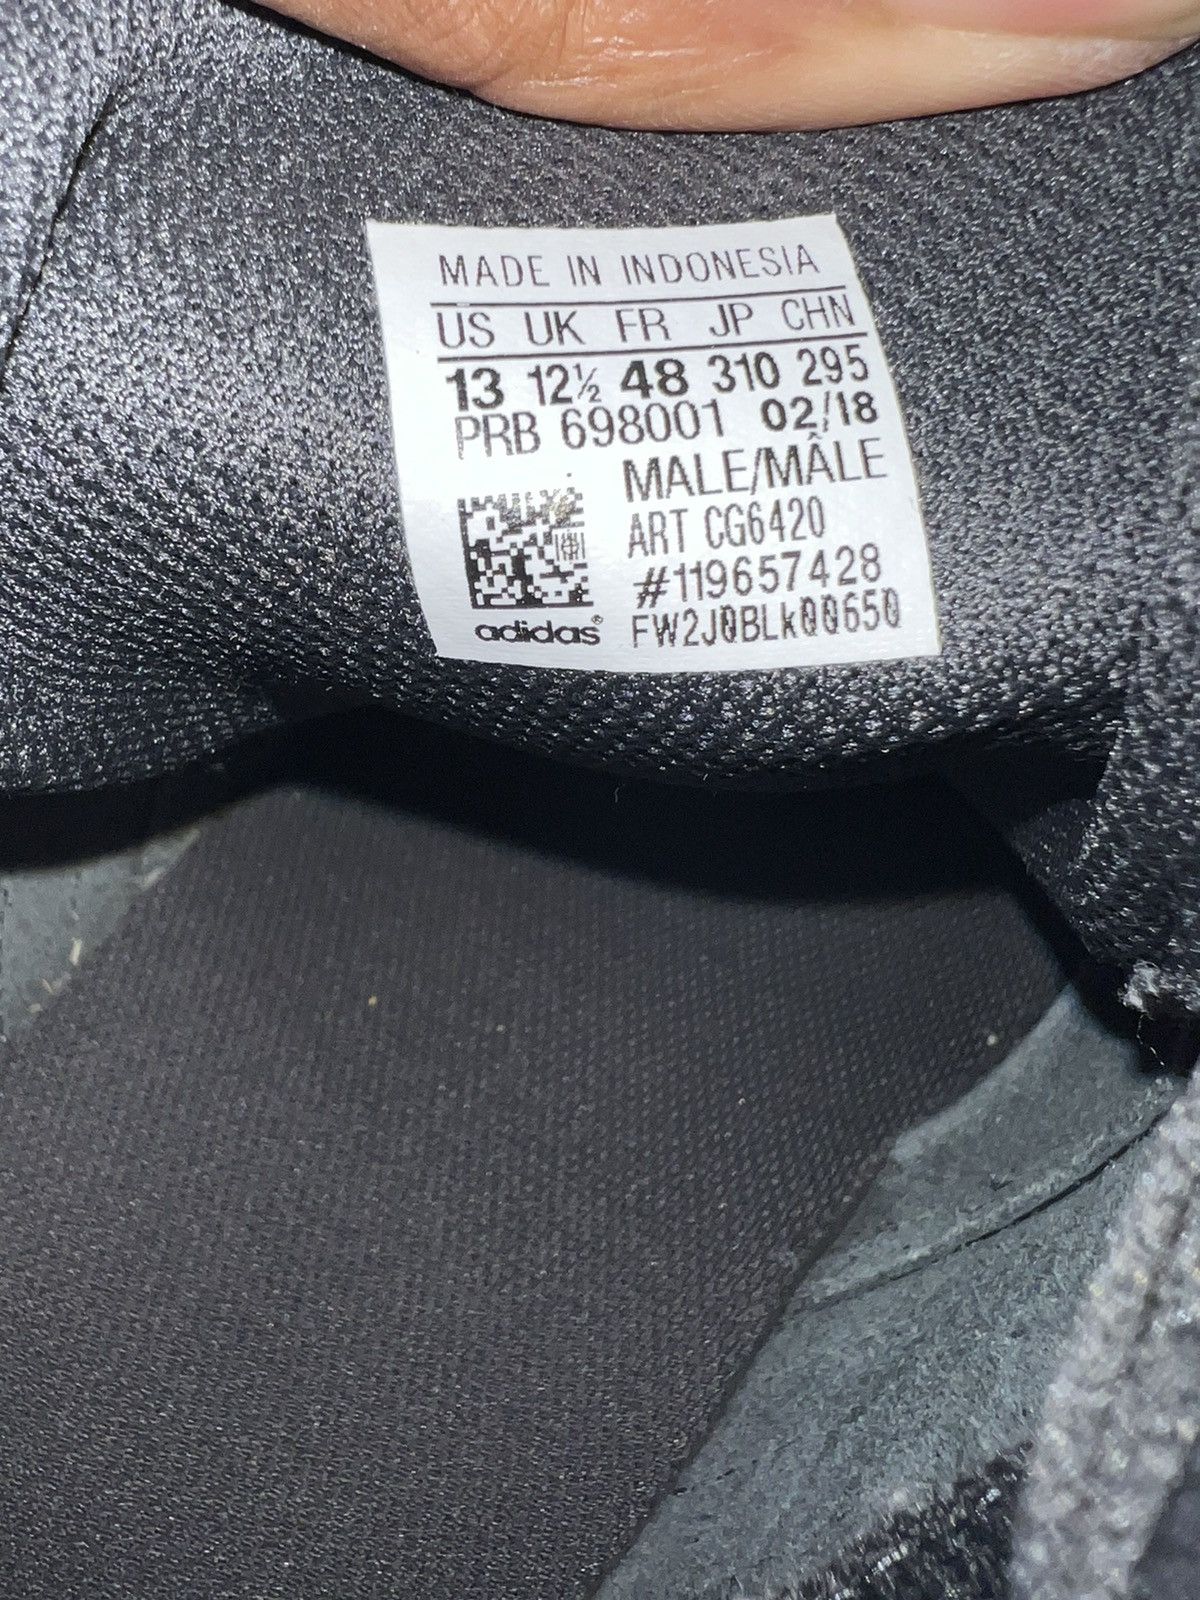 Adidas Adidas Calabasas Size US 12 / EU 45 - 6 Thumbnail